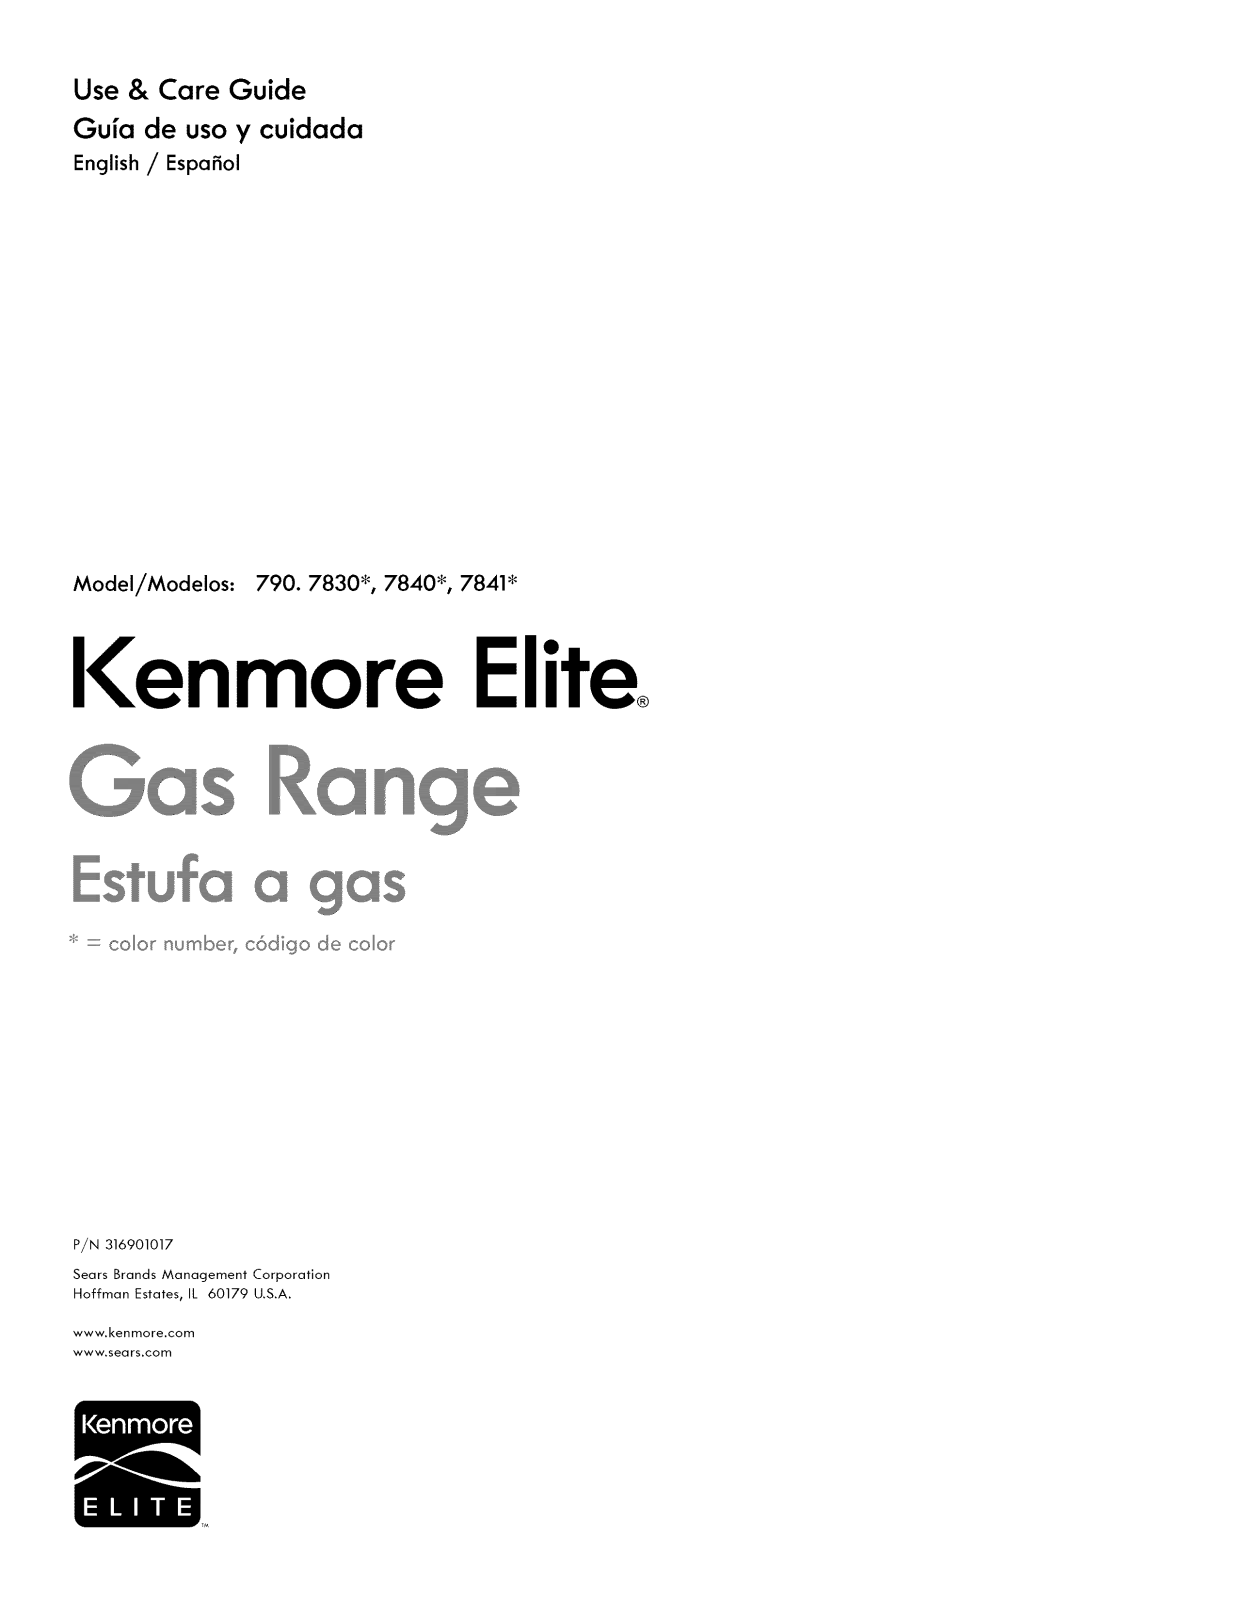 Kenmore Elite 79078413013, 79078413012, 79078413011, 79078413010, 79078409012 Owner’s Manual